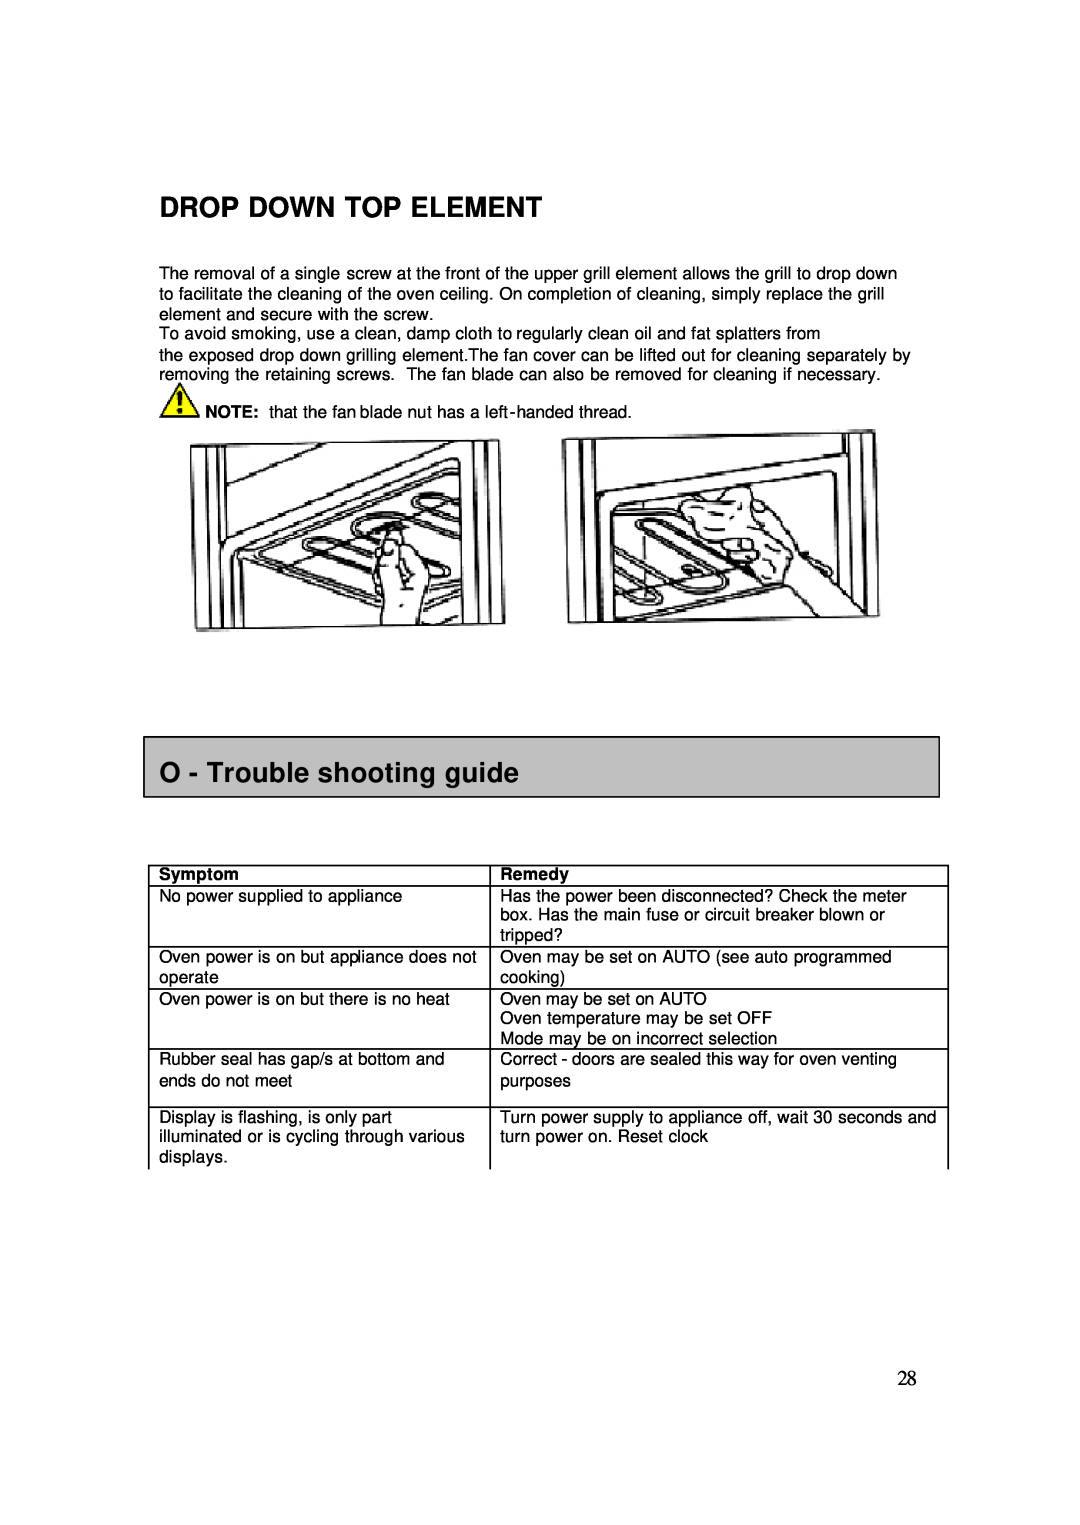 AEG 4006G-M user manual Drop Down Top Element, O - Trouble shooting guide, Symptom, Remedy 